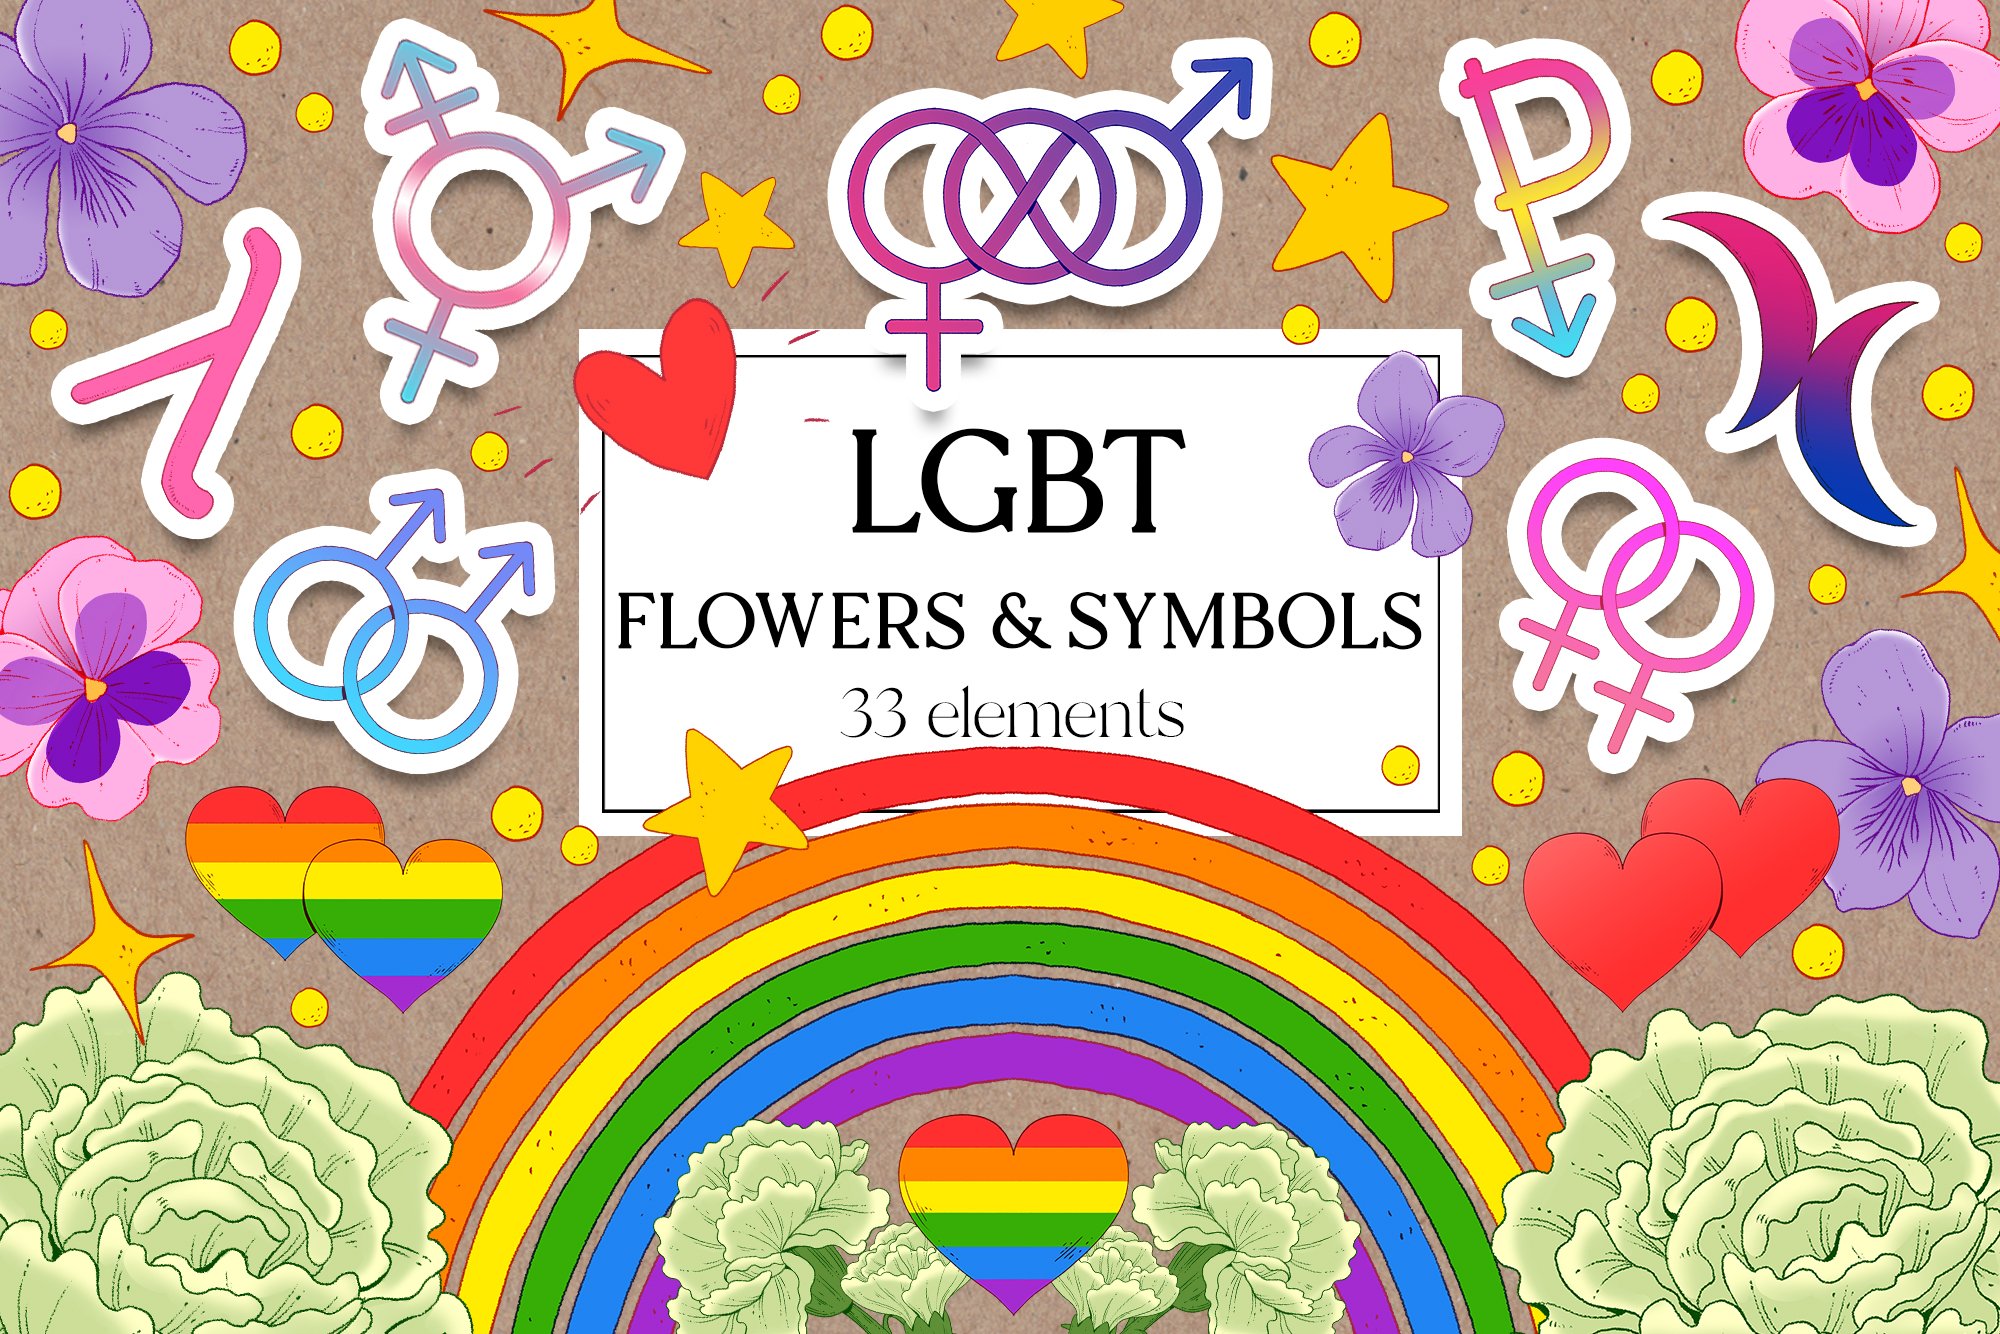 LGBT flowers & symbols. Pride Month cover image.